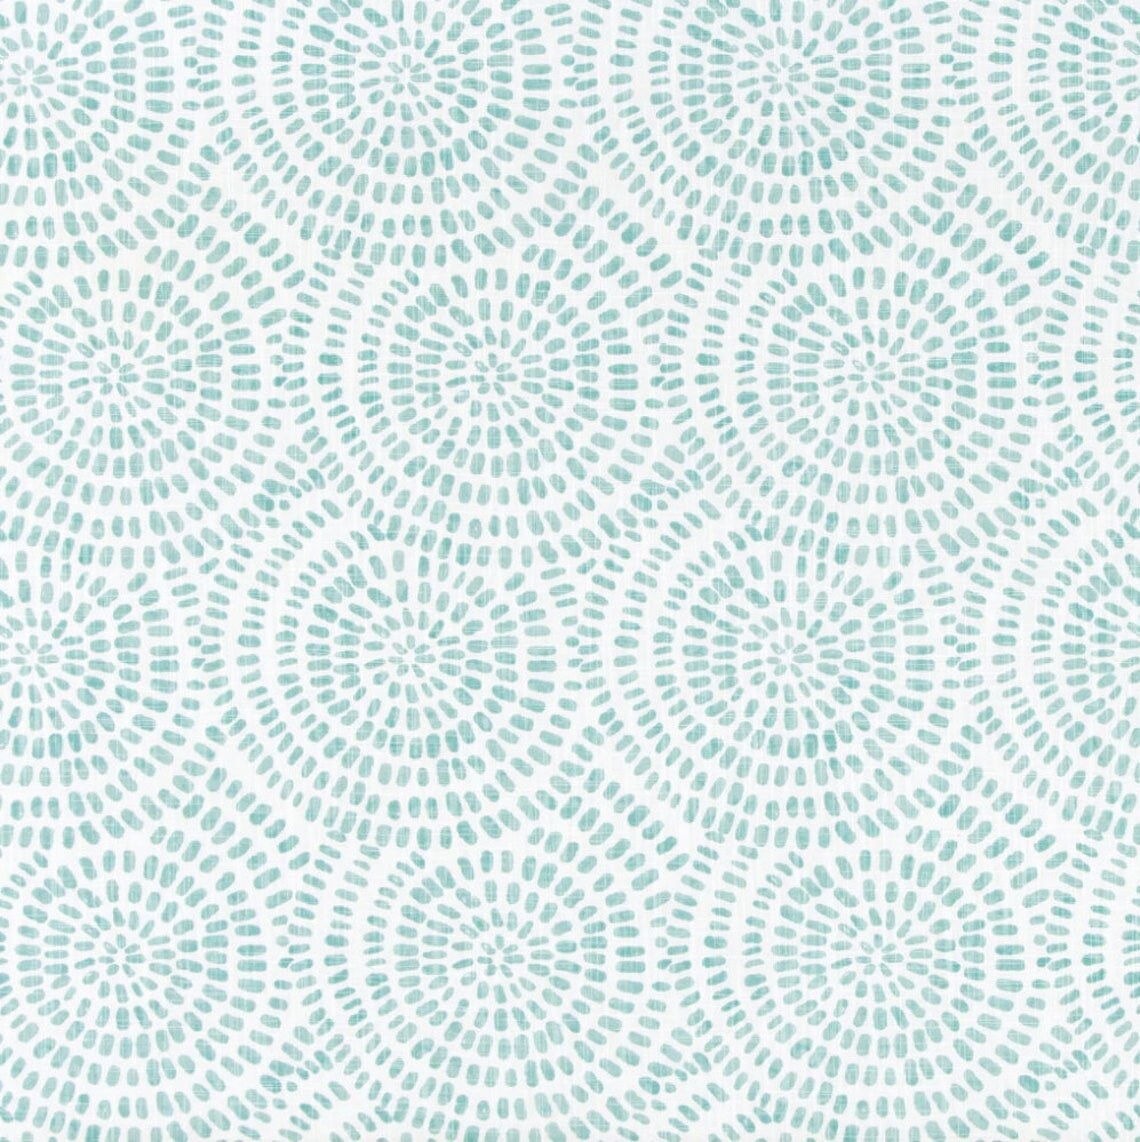 pillow sham in cecil cancun blue watercolor dot circular geometric